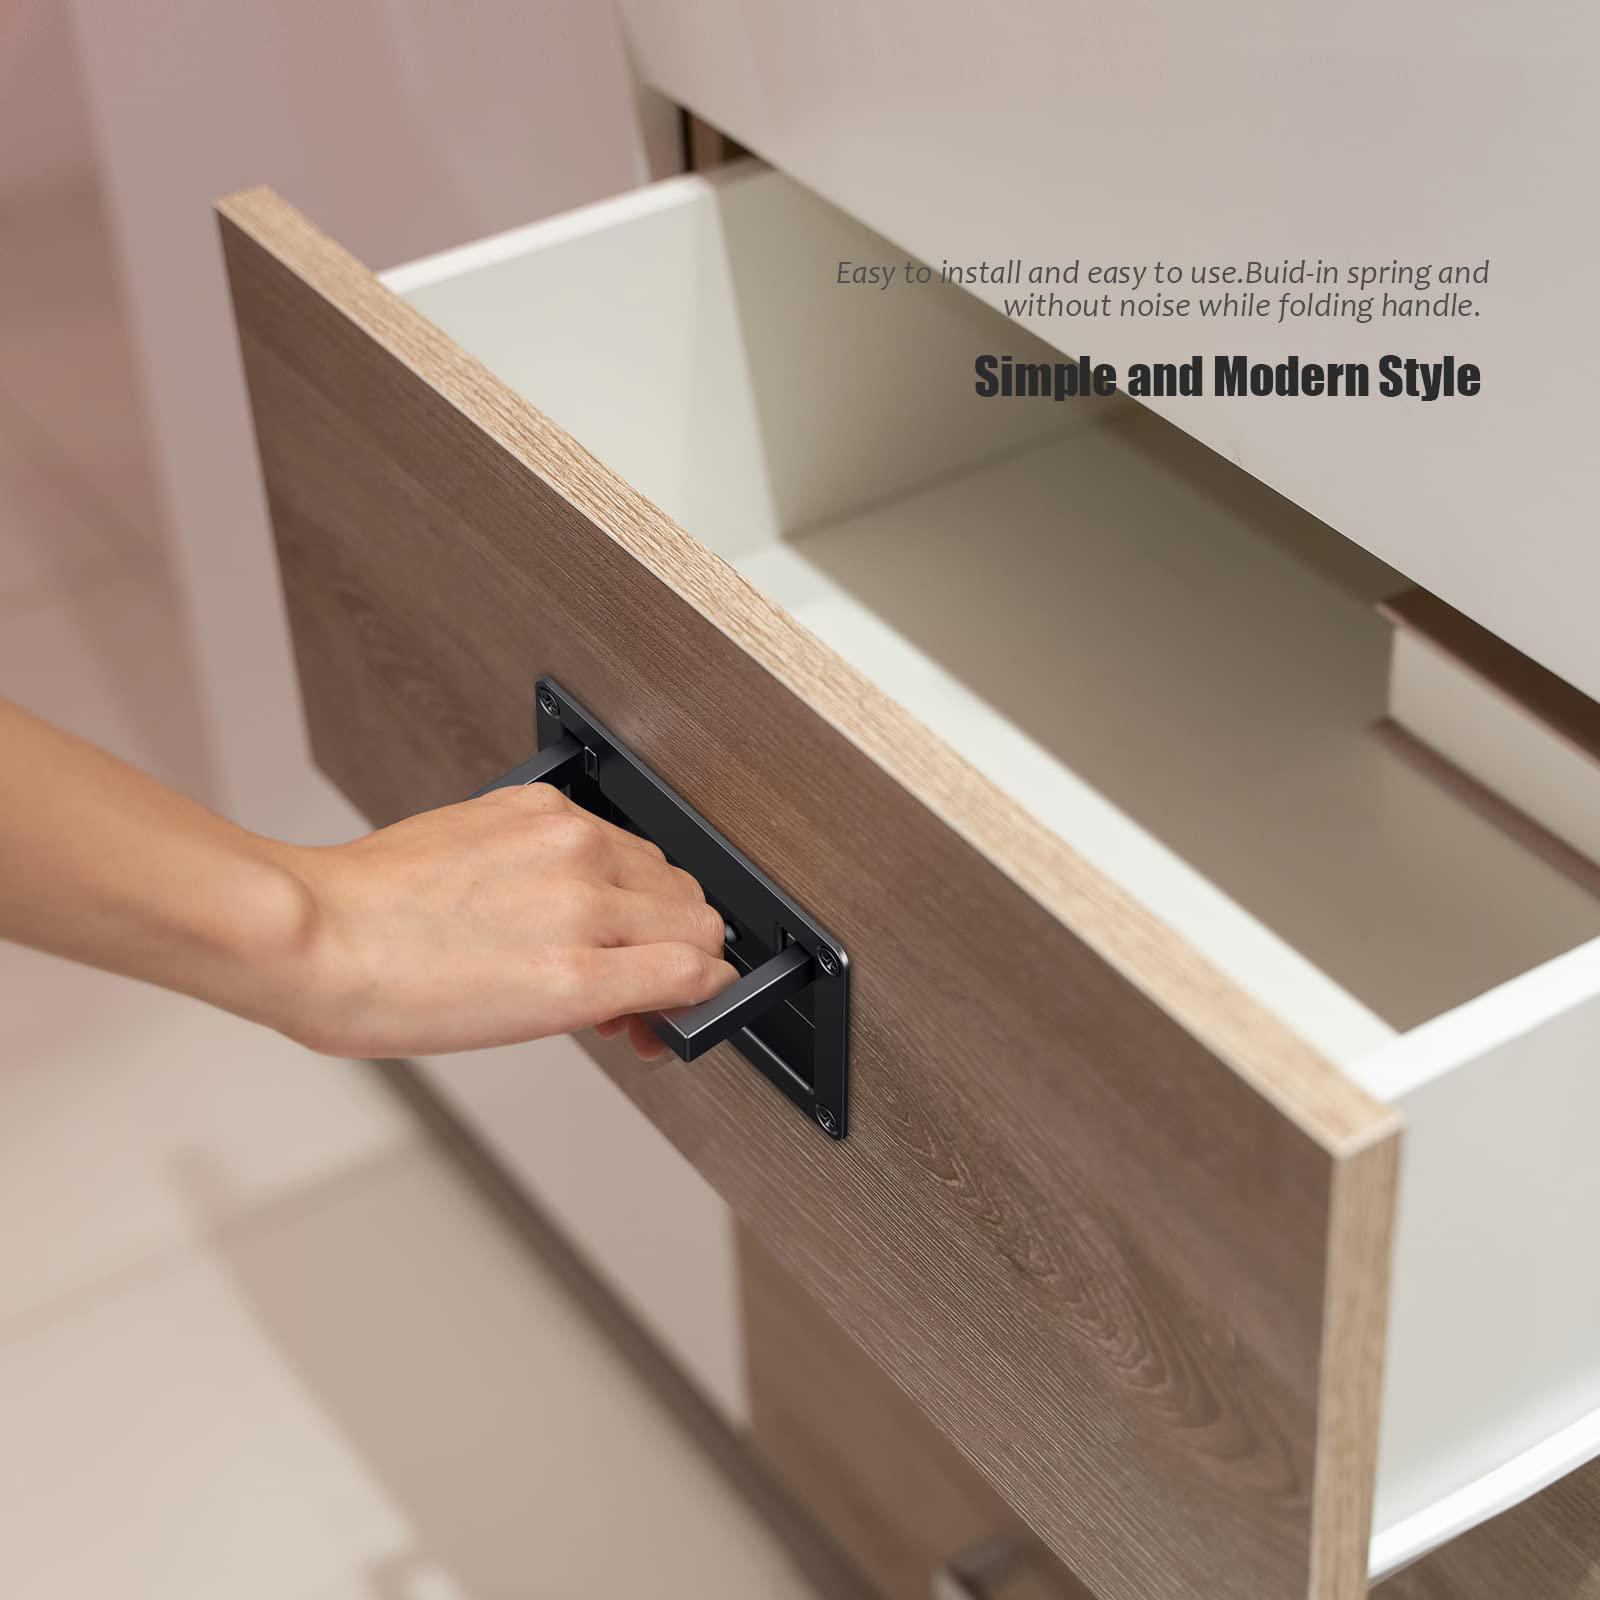 syine black zinc alloy recessed door pull handle recessed flush pull handle for drawer access door space door toolbox,1 pack,4.35 x